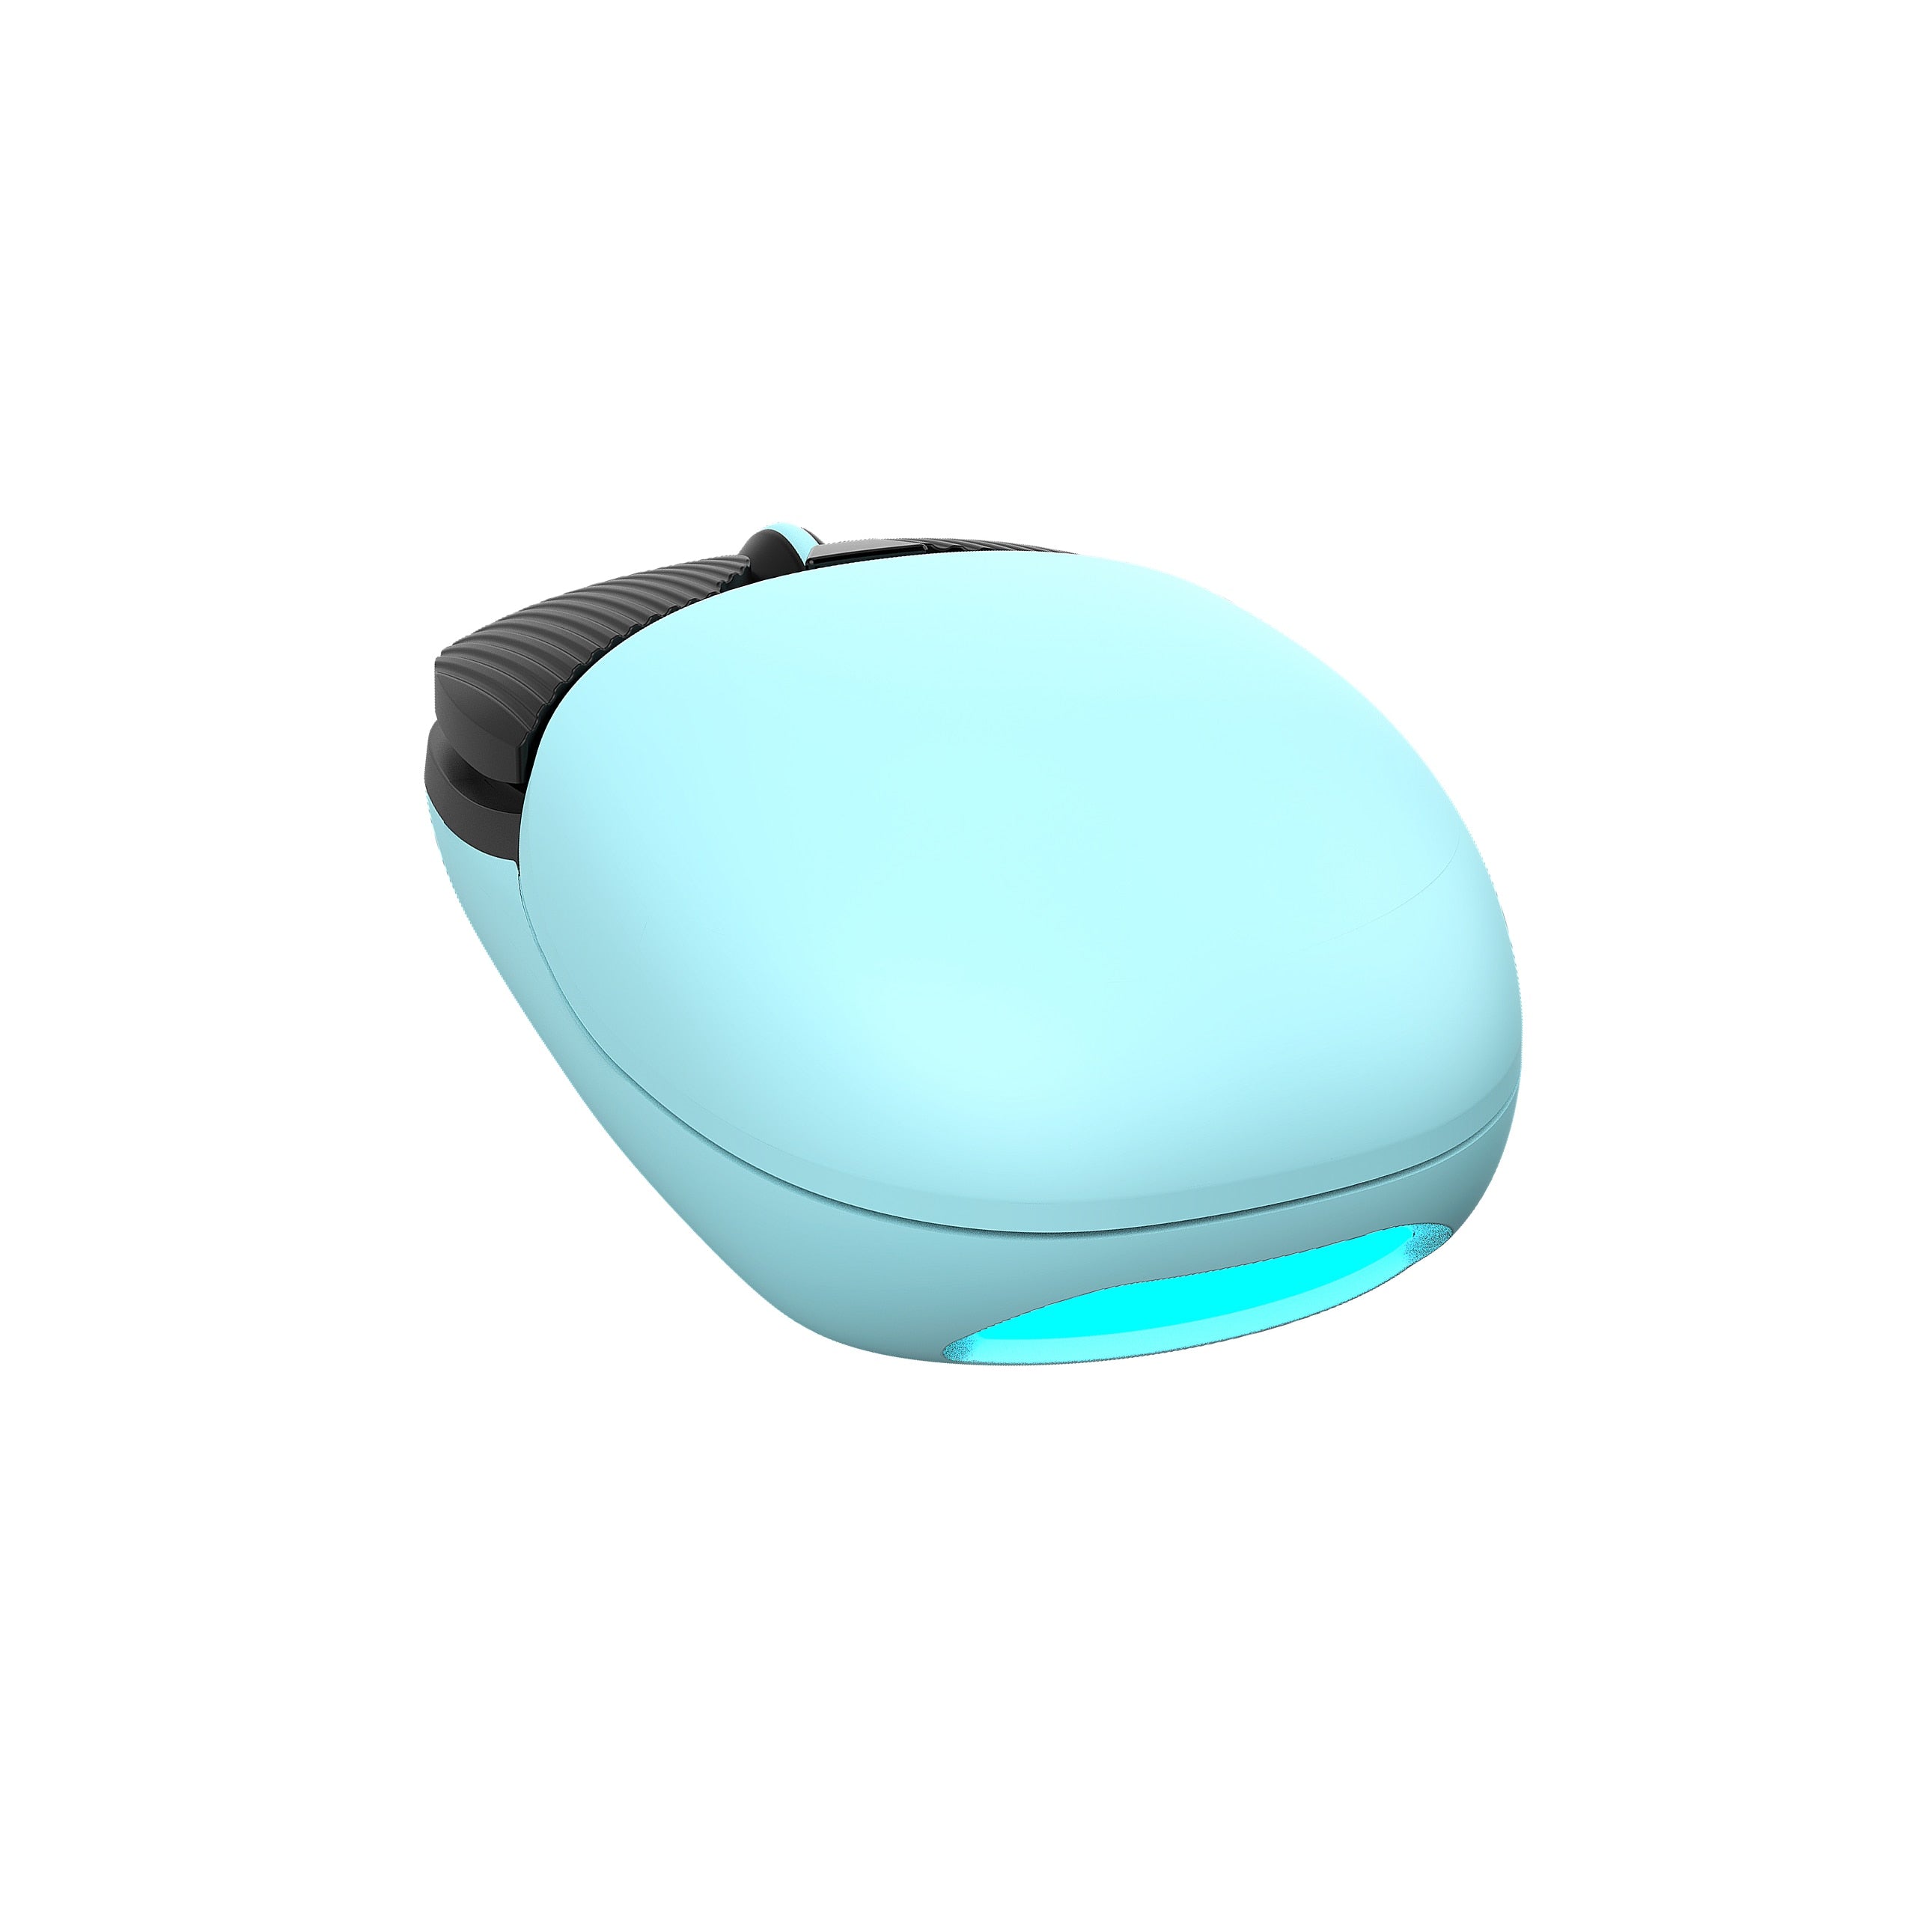 Achetez 2,4g Bluetooth Dual Mode Shell Shell Sans Fil Souris Avec